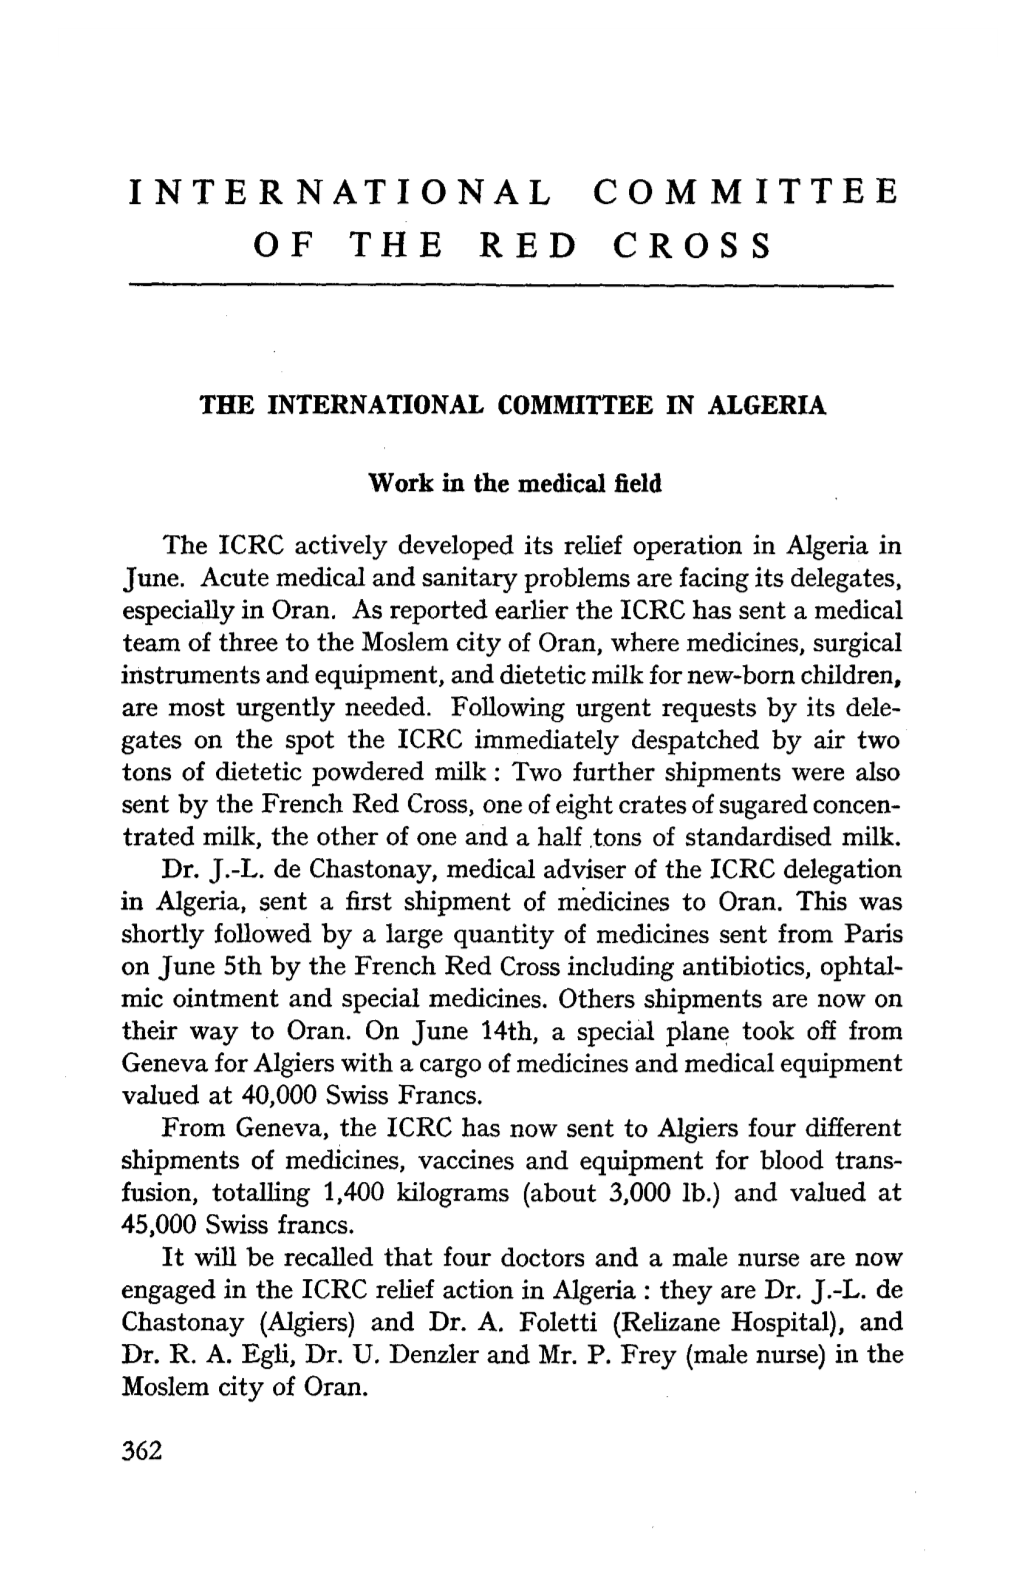 The International Committee in Algeria